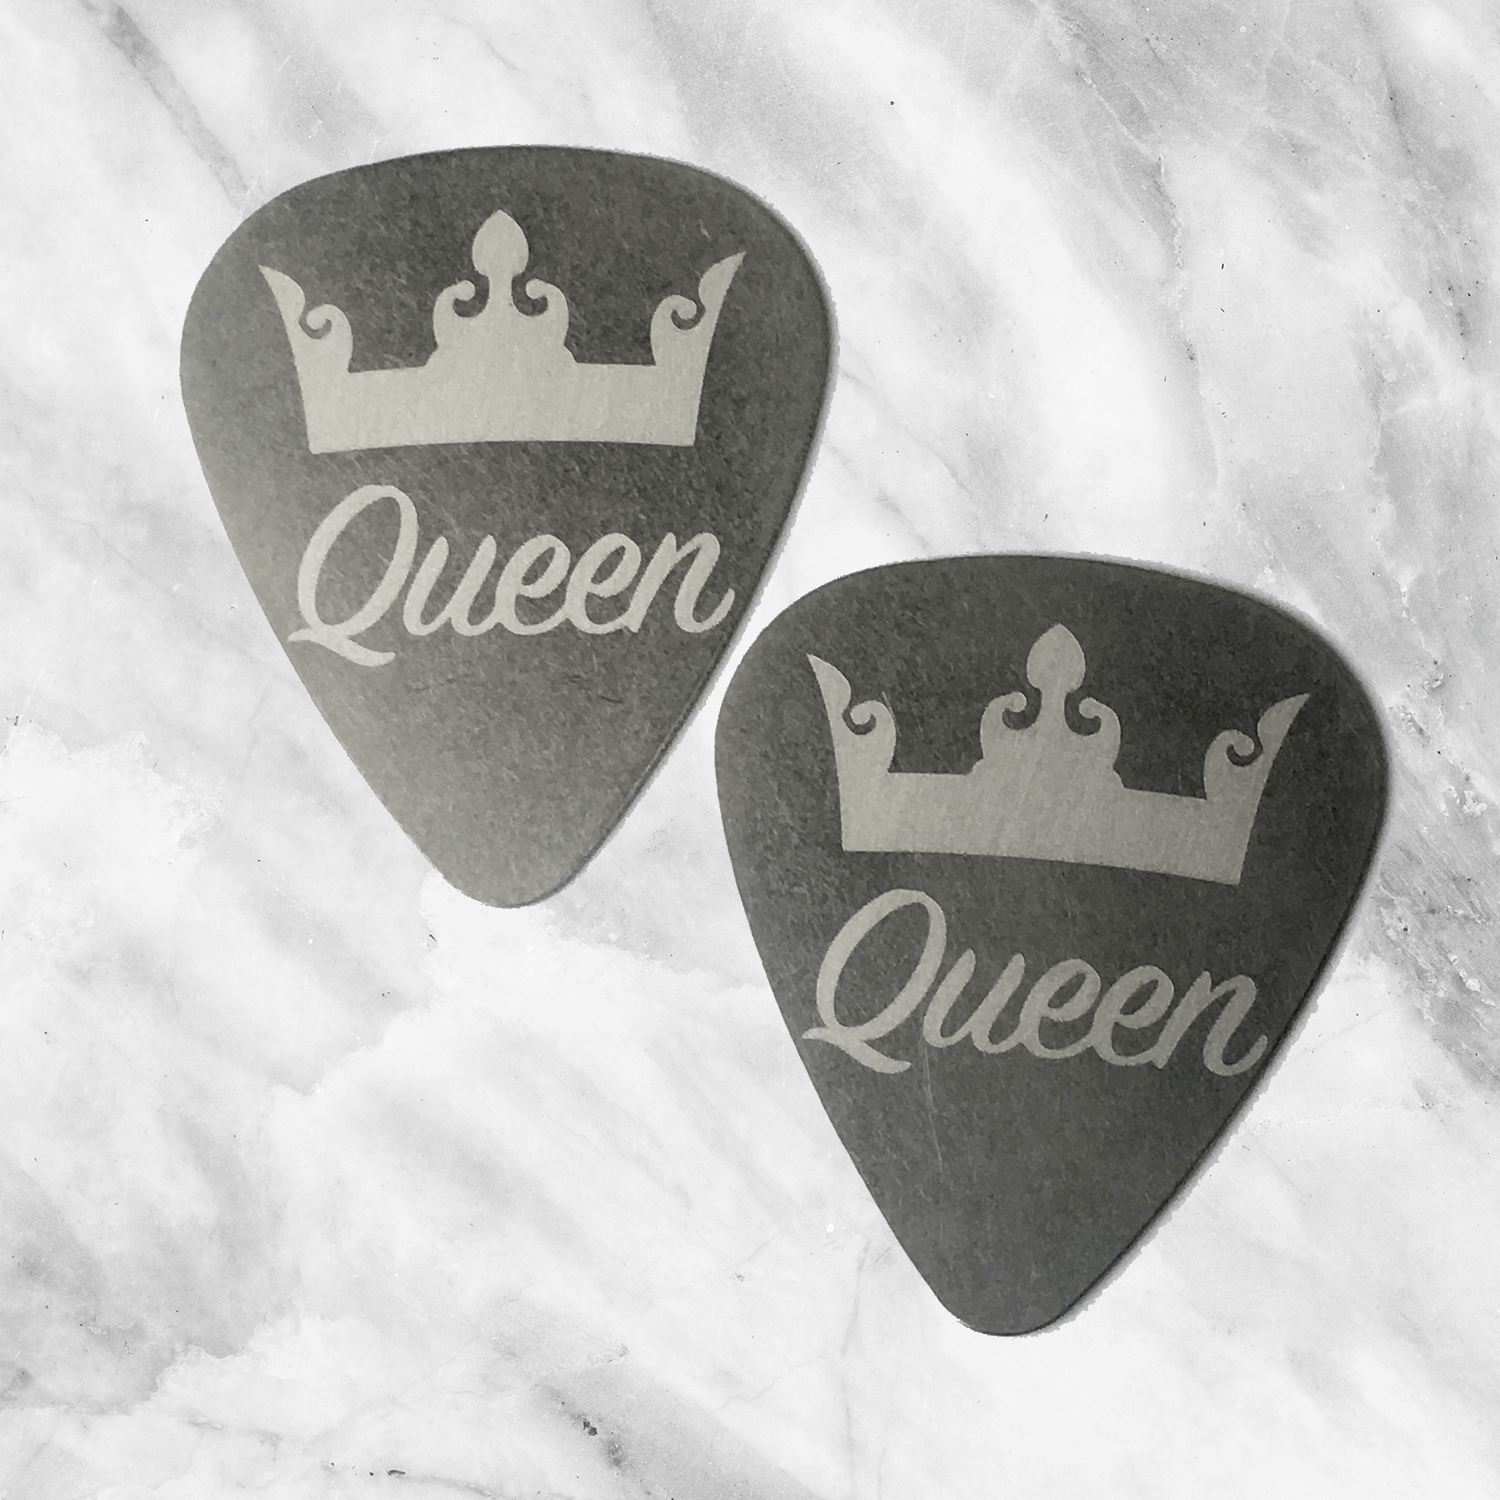 Queen and Queen - Couples Steel Guitar Pick - Set of Two